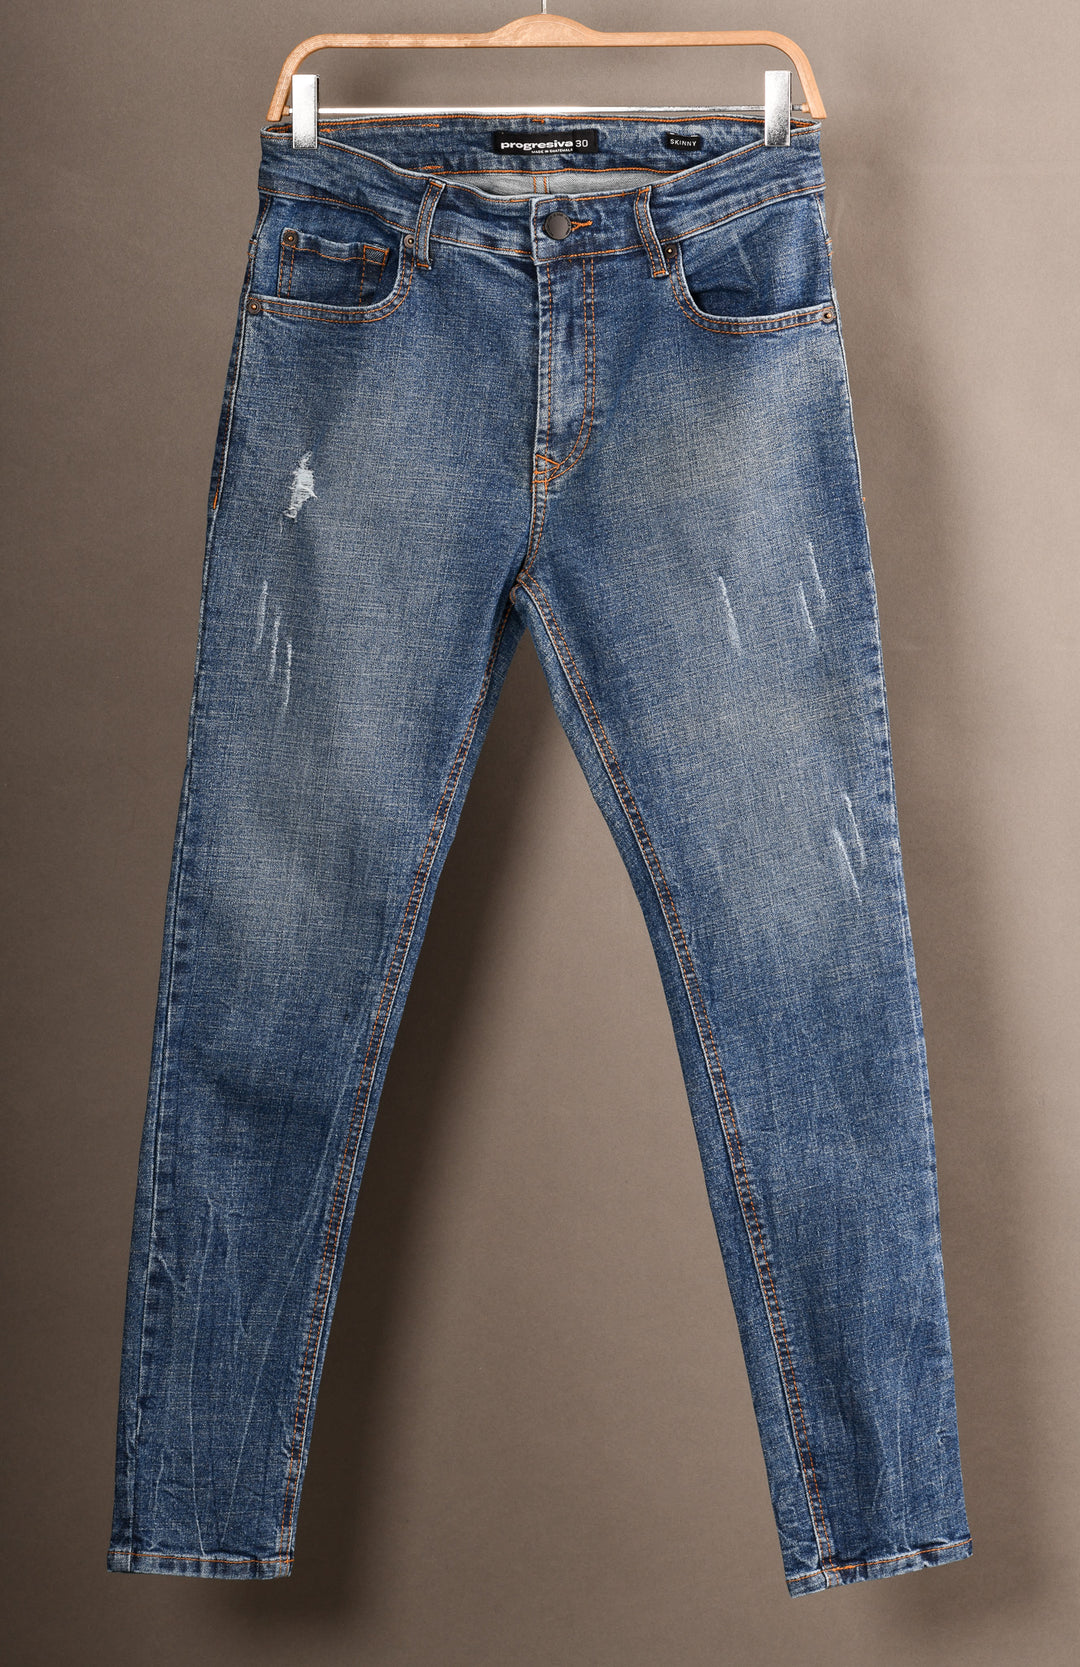 Jeans super denim - No. 6  - skinny - everyday blue